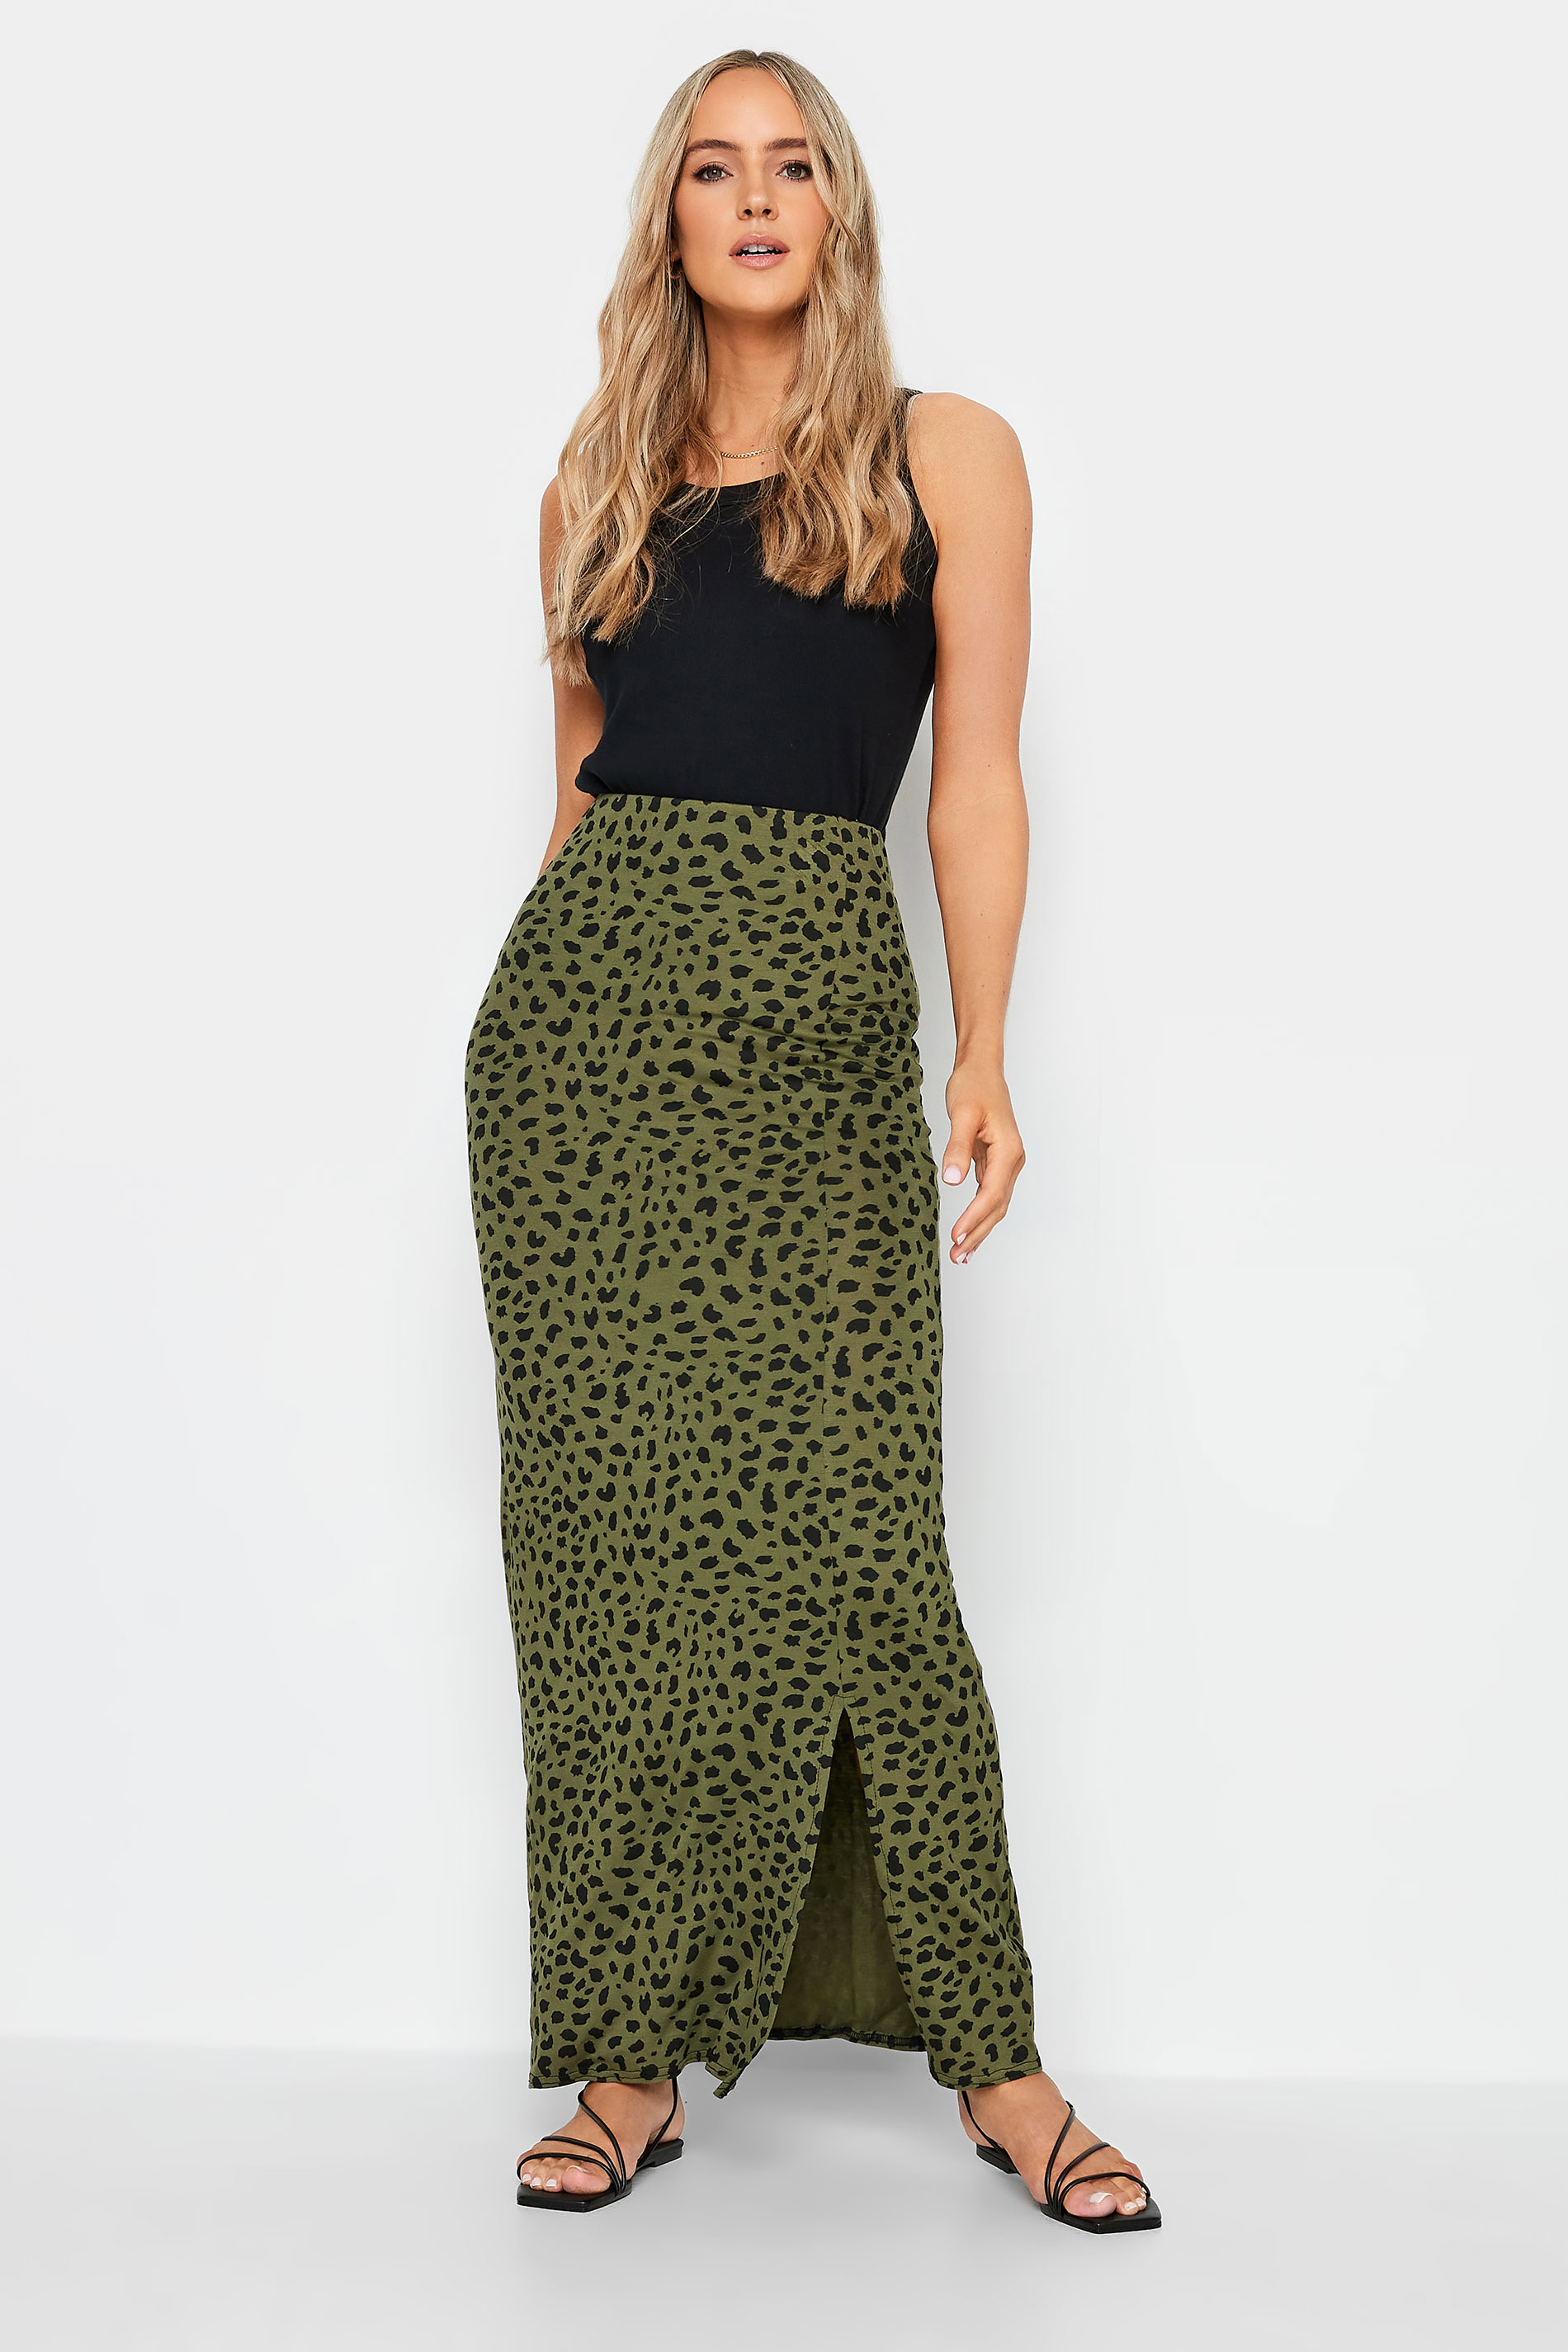 LTS Tall Women's Khaki Green Dalmatian Print Maxi Skirt | Long Tall Sally  2